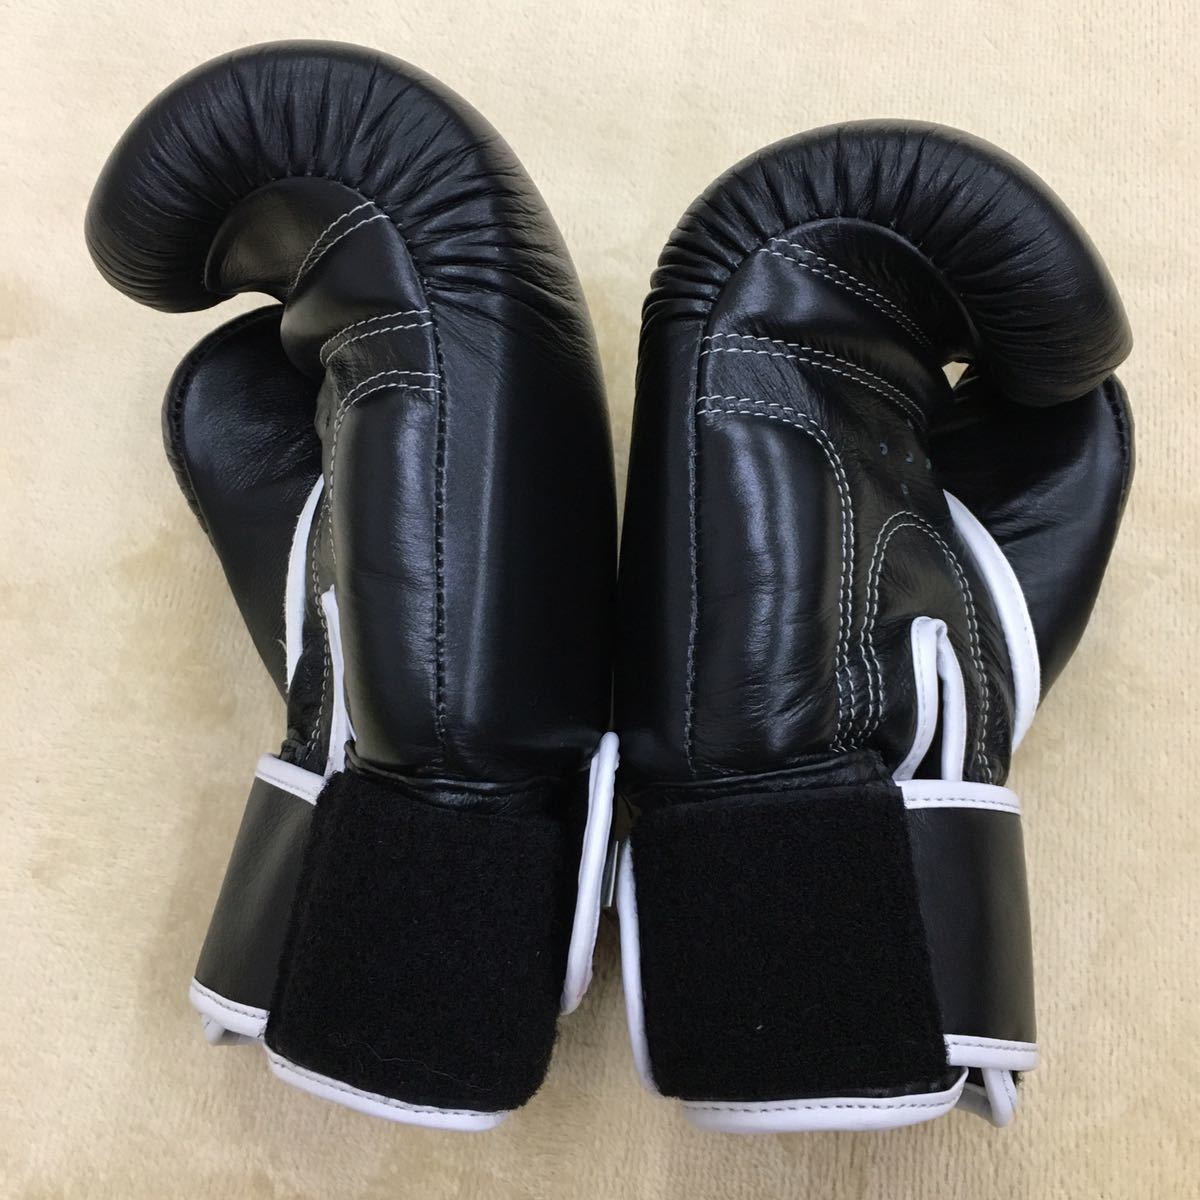 F.R.JAPAN BOXING ファイティグロード ボクシング グローブ ムエタイ 総合格闘技 トレーニング 練習 10oz ブラック 黒の画像4